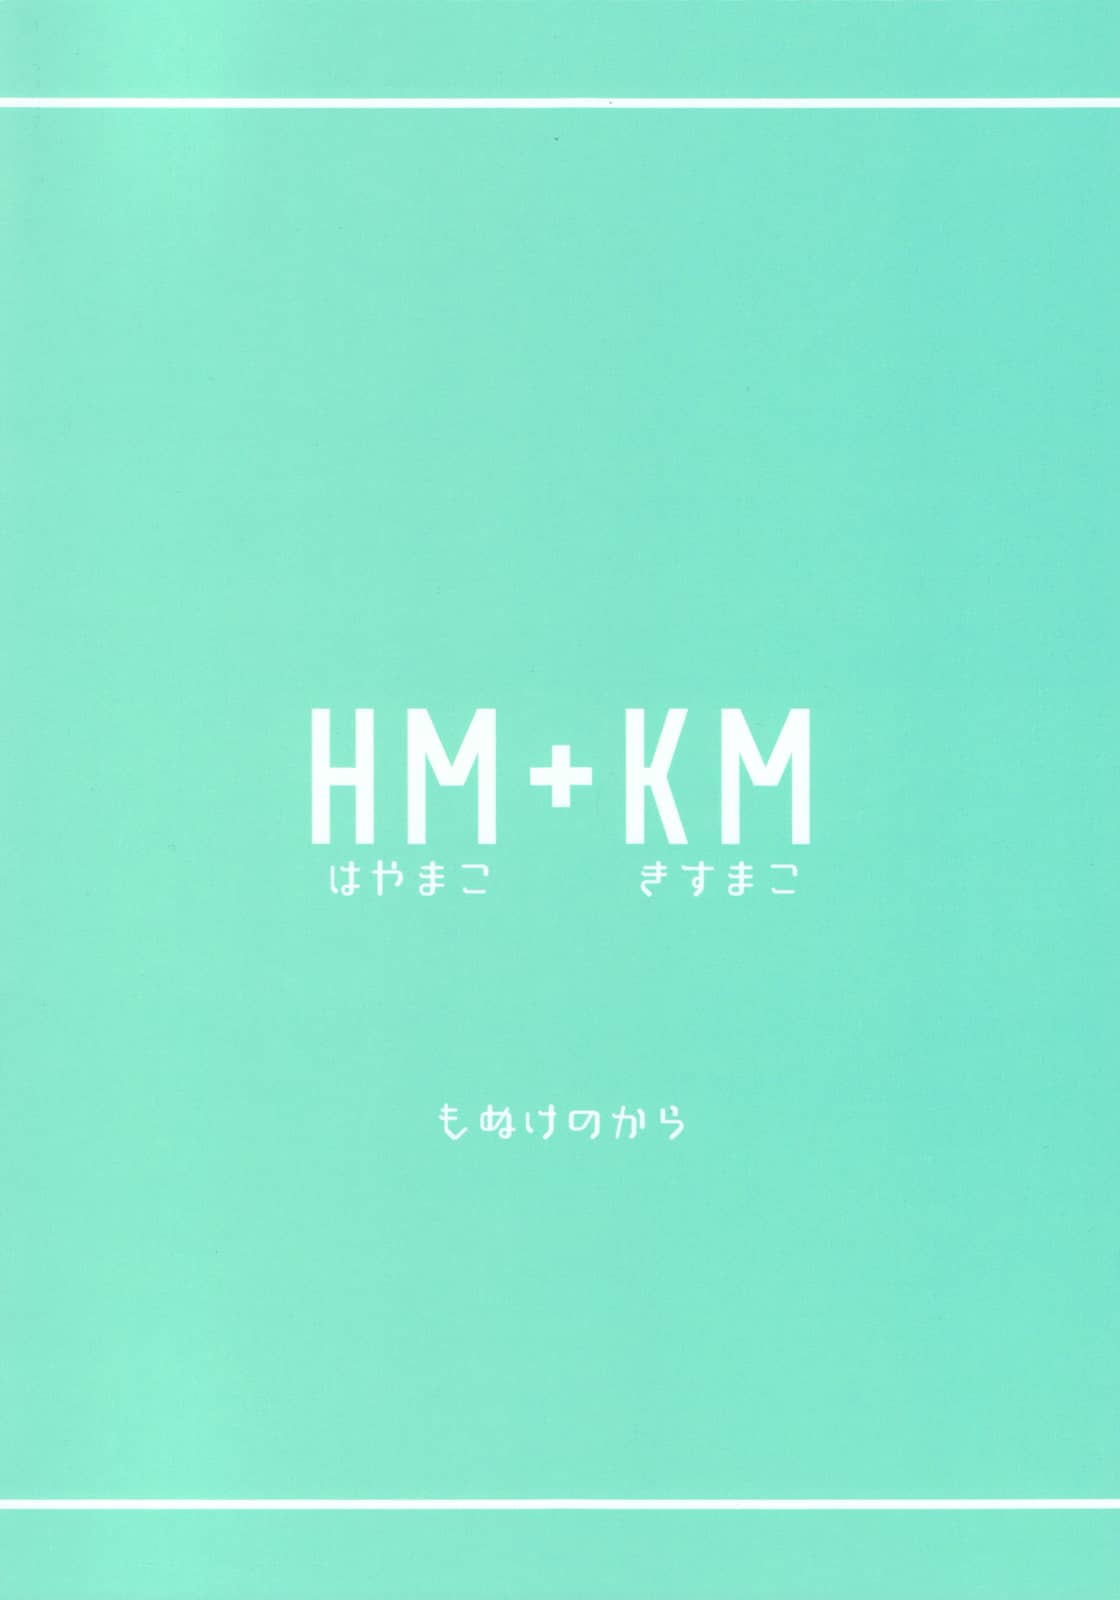 HM + KM